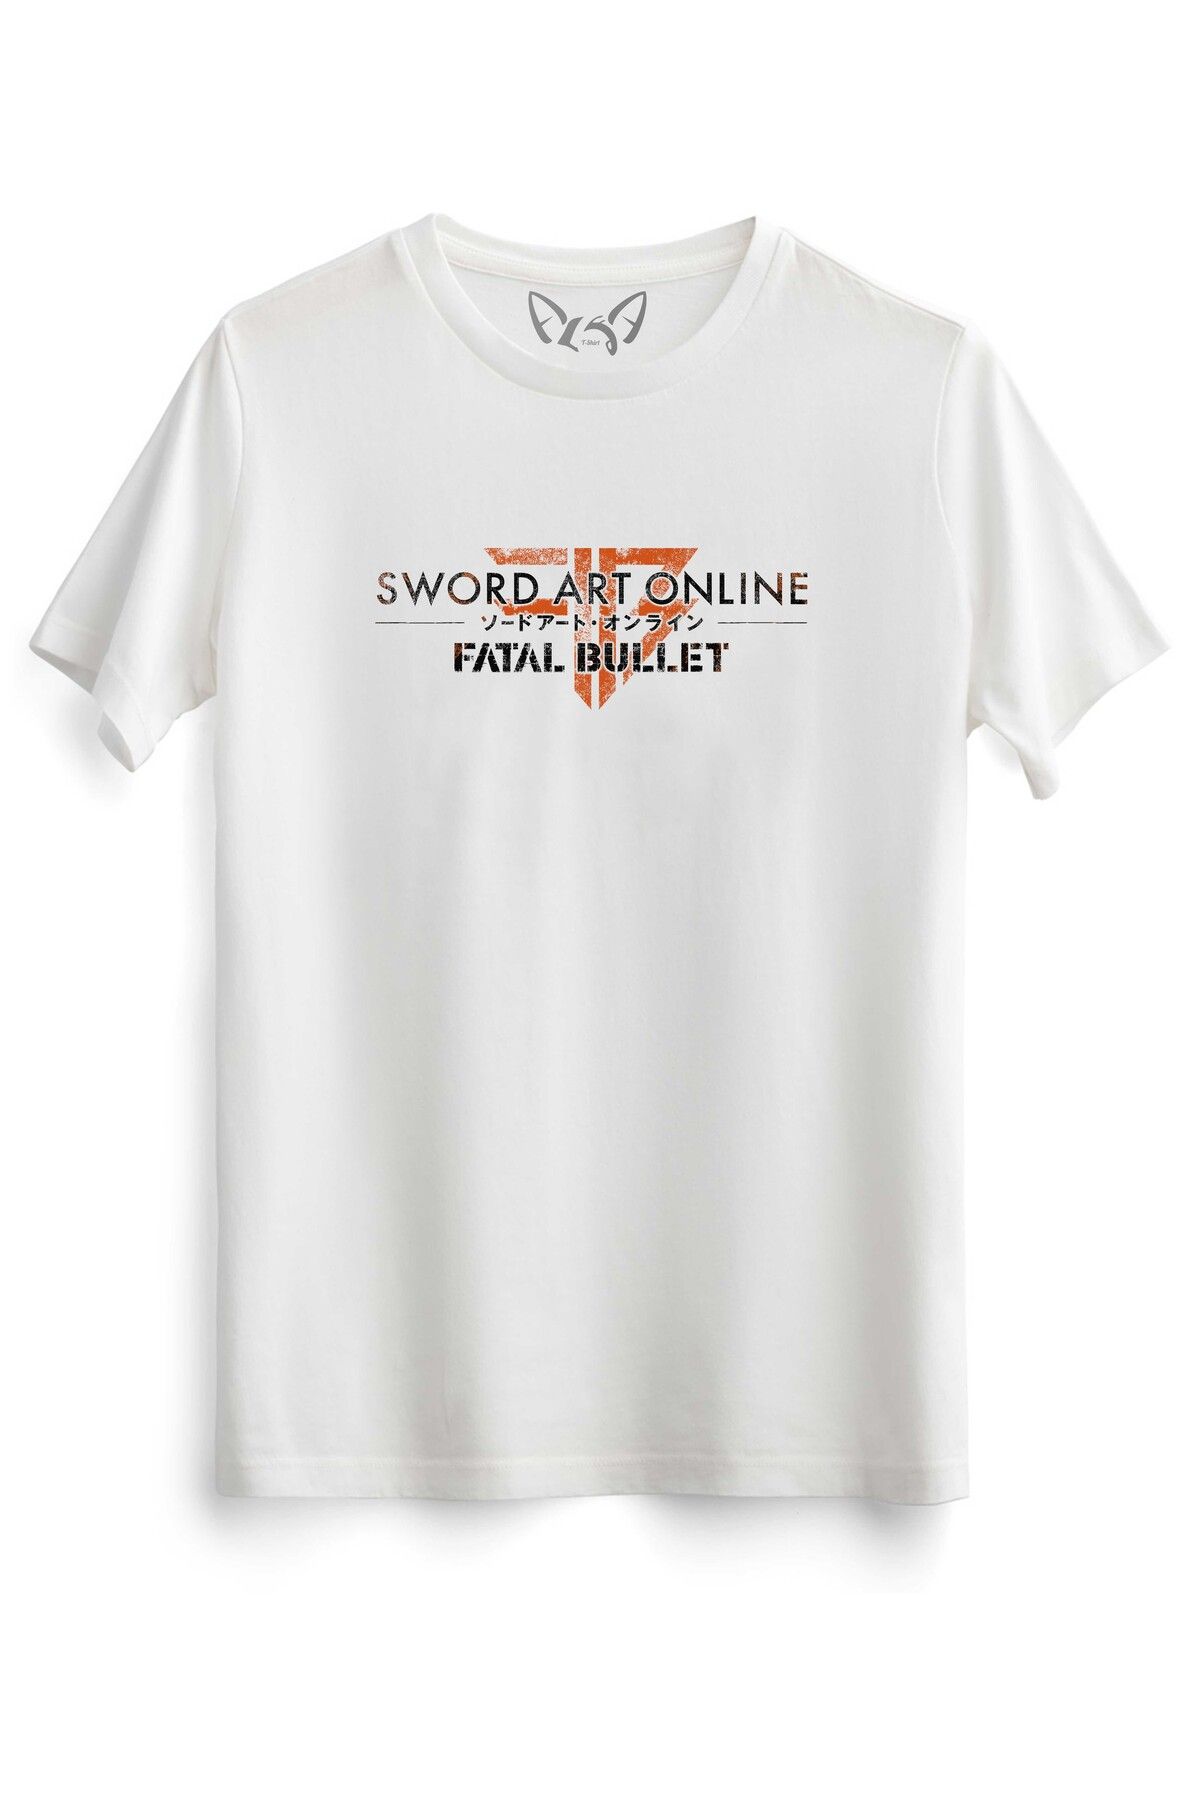 Alfa Tshirt Sword Art Online Baskılı Çocuk Beyaz Tshirt